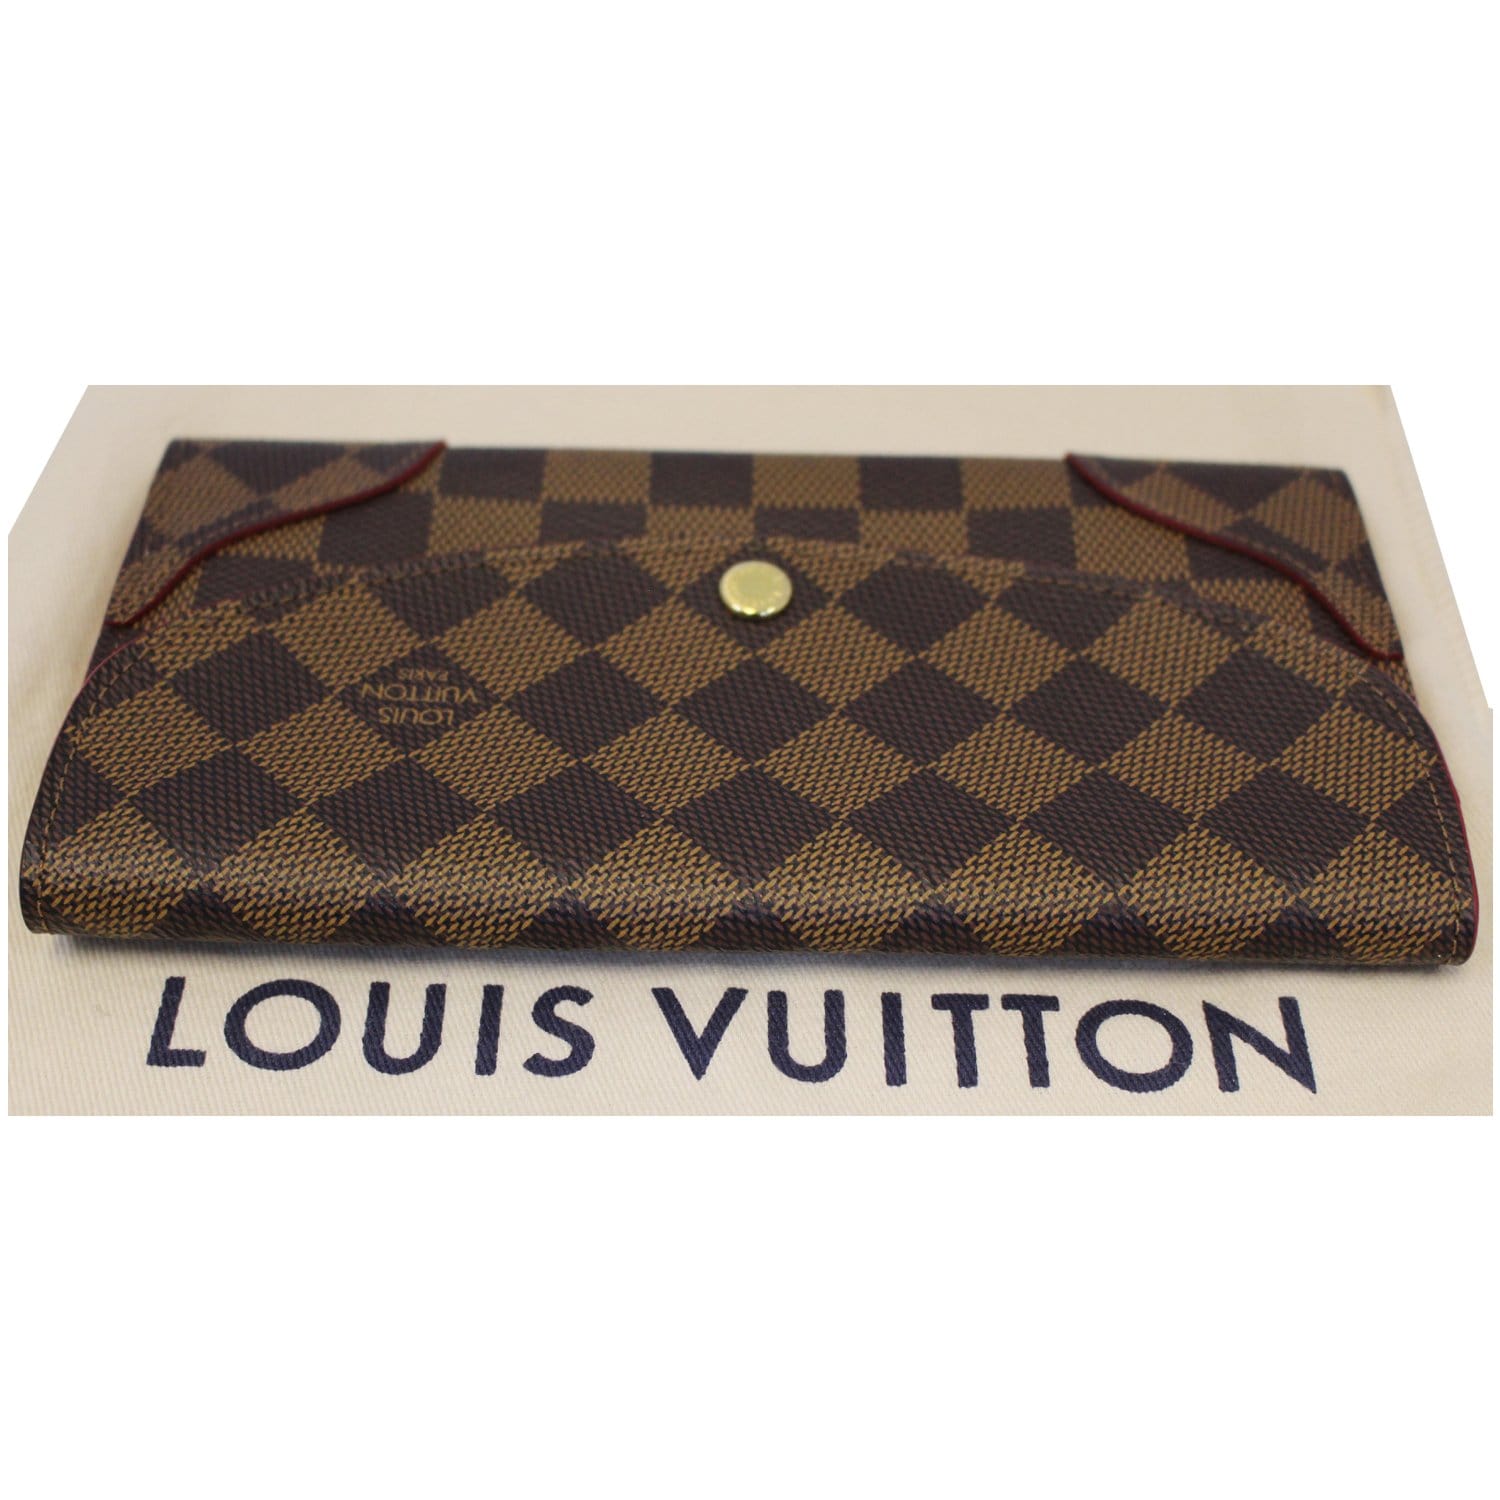 Louis Vuitton Caissa wallet  Louis vuitton, Louis vuitton bag, Louis